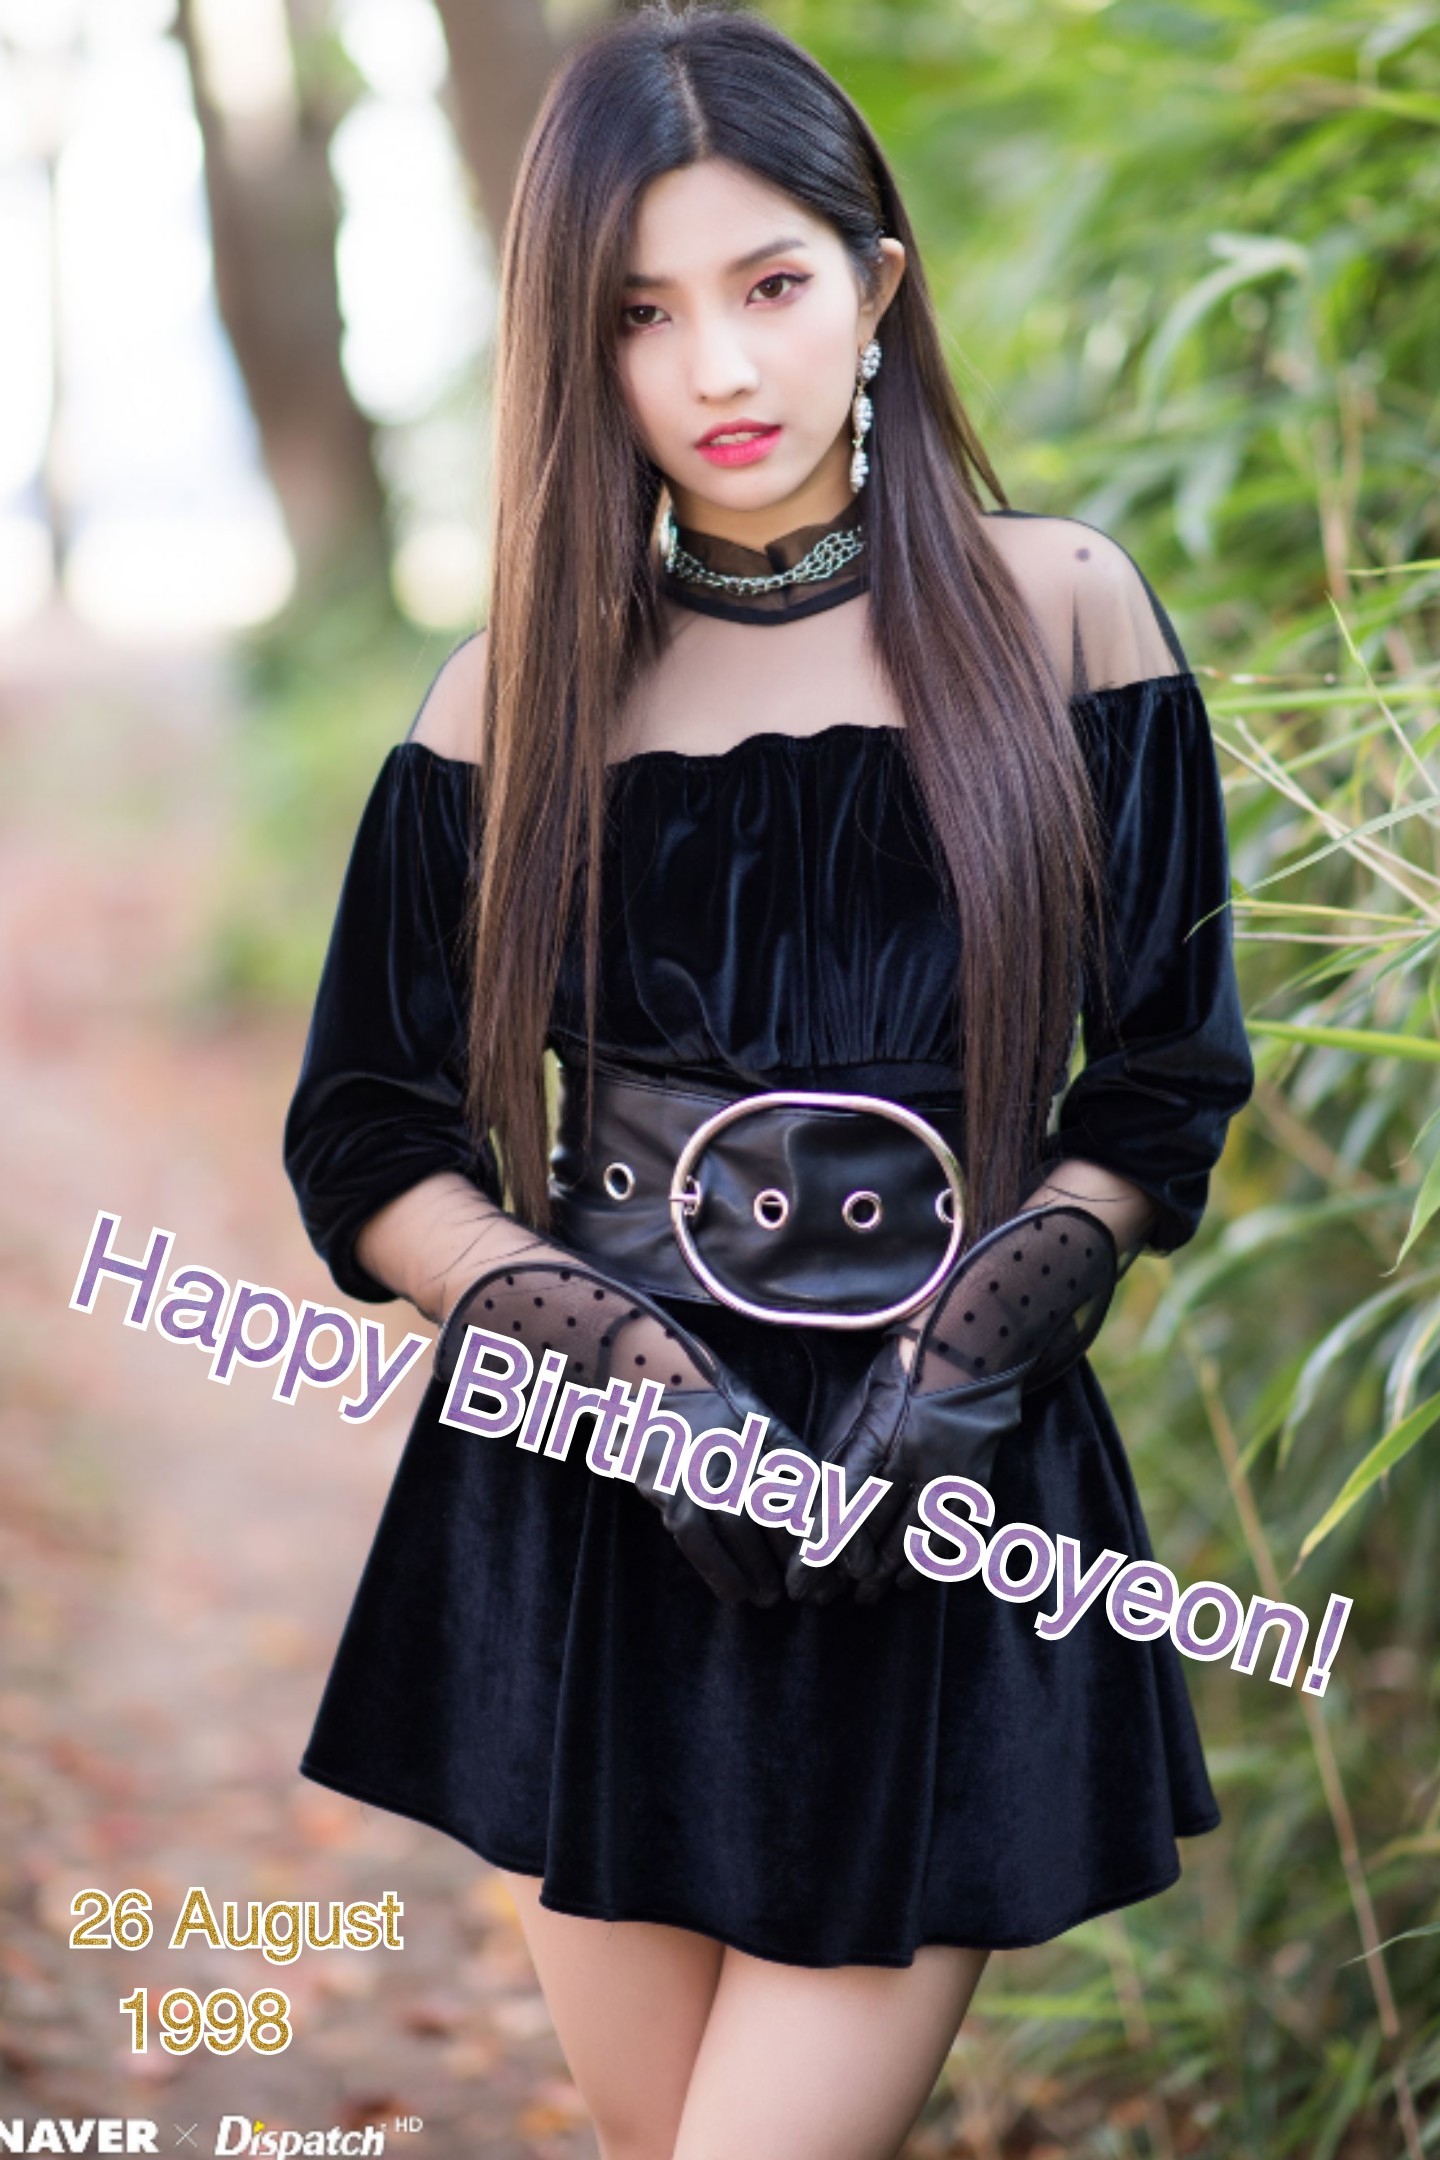 Happy Birthday Soyeon from (G)-Idle!😊😀🤗❤